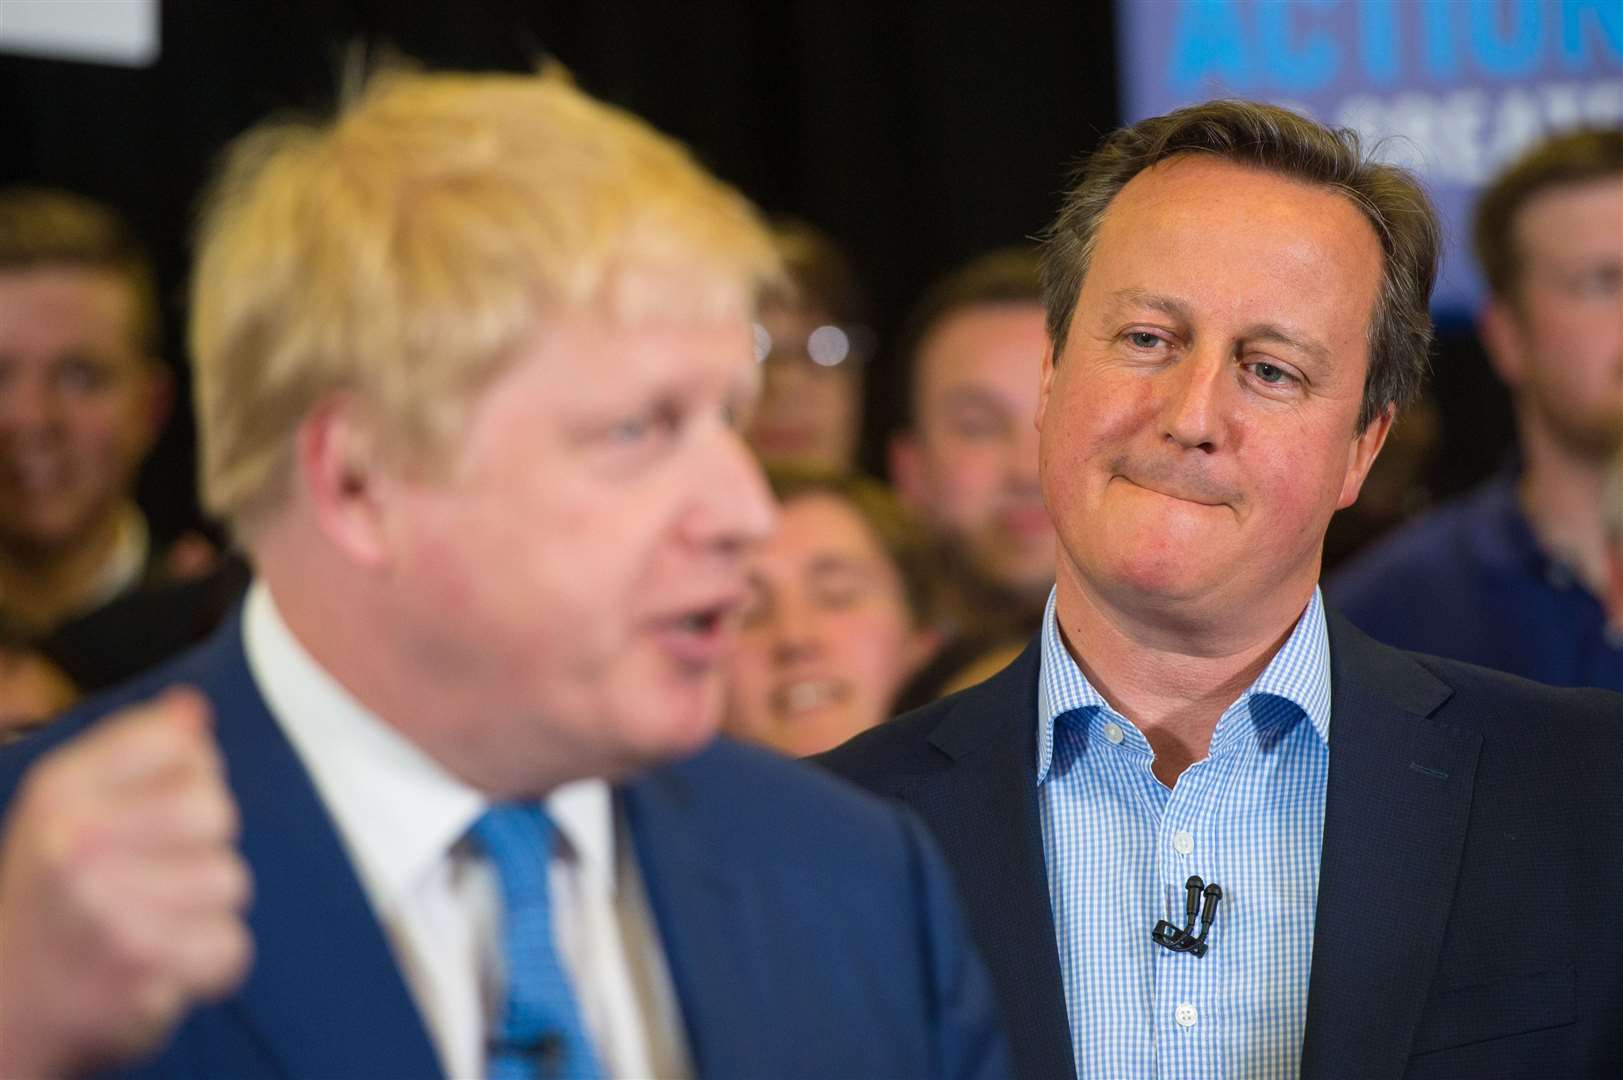 David Cameron watches as Boris Johnson speaks (Dominic Lipinski/PA)